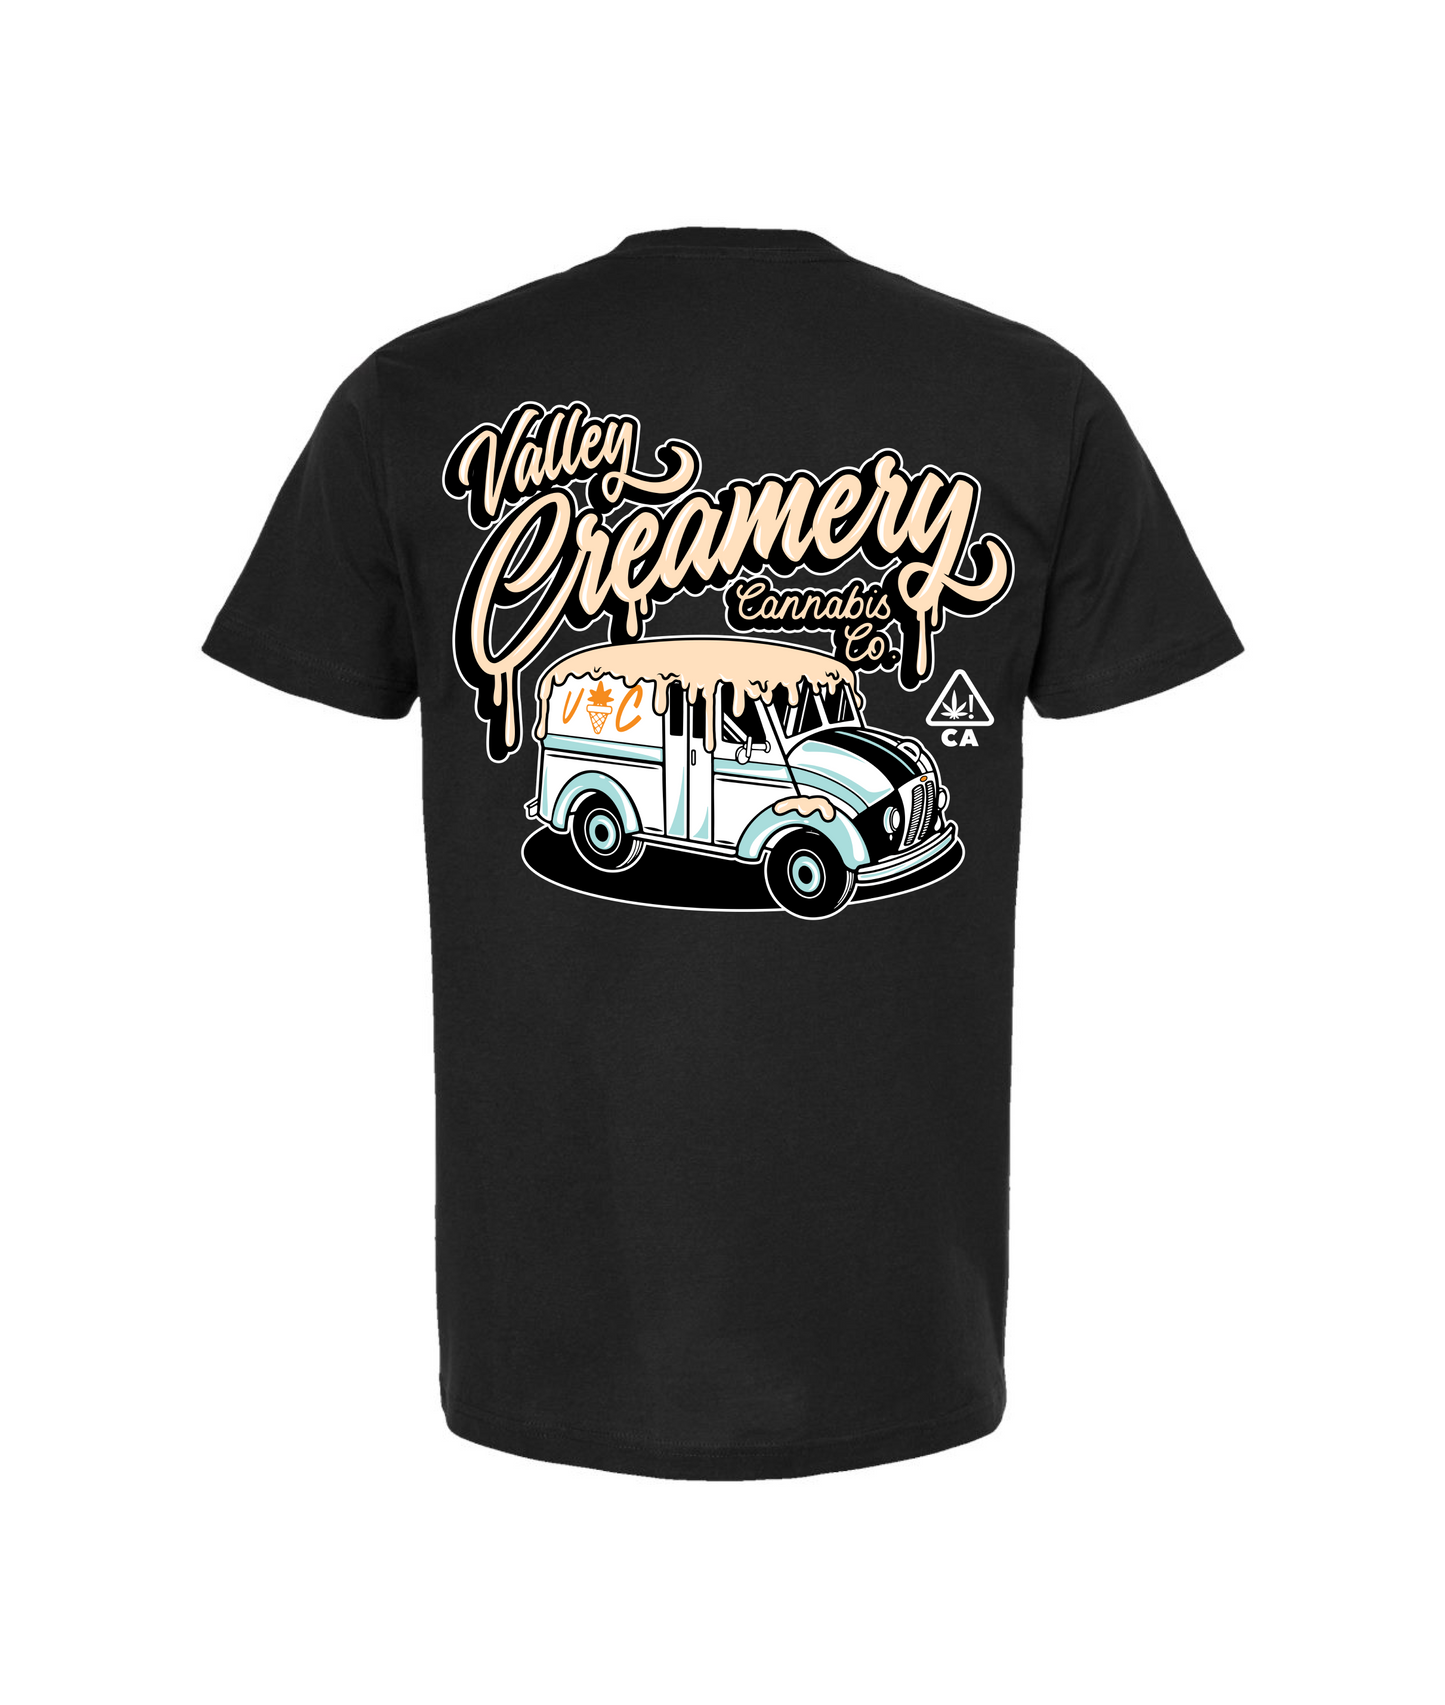 Valley Creamery Cannabis Co. - CREAMERY TRUCK - Black T Shirt